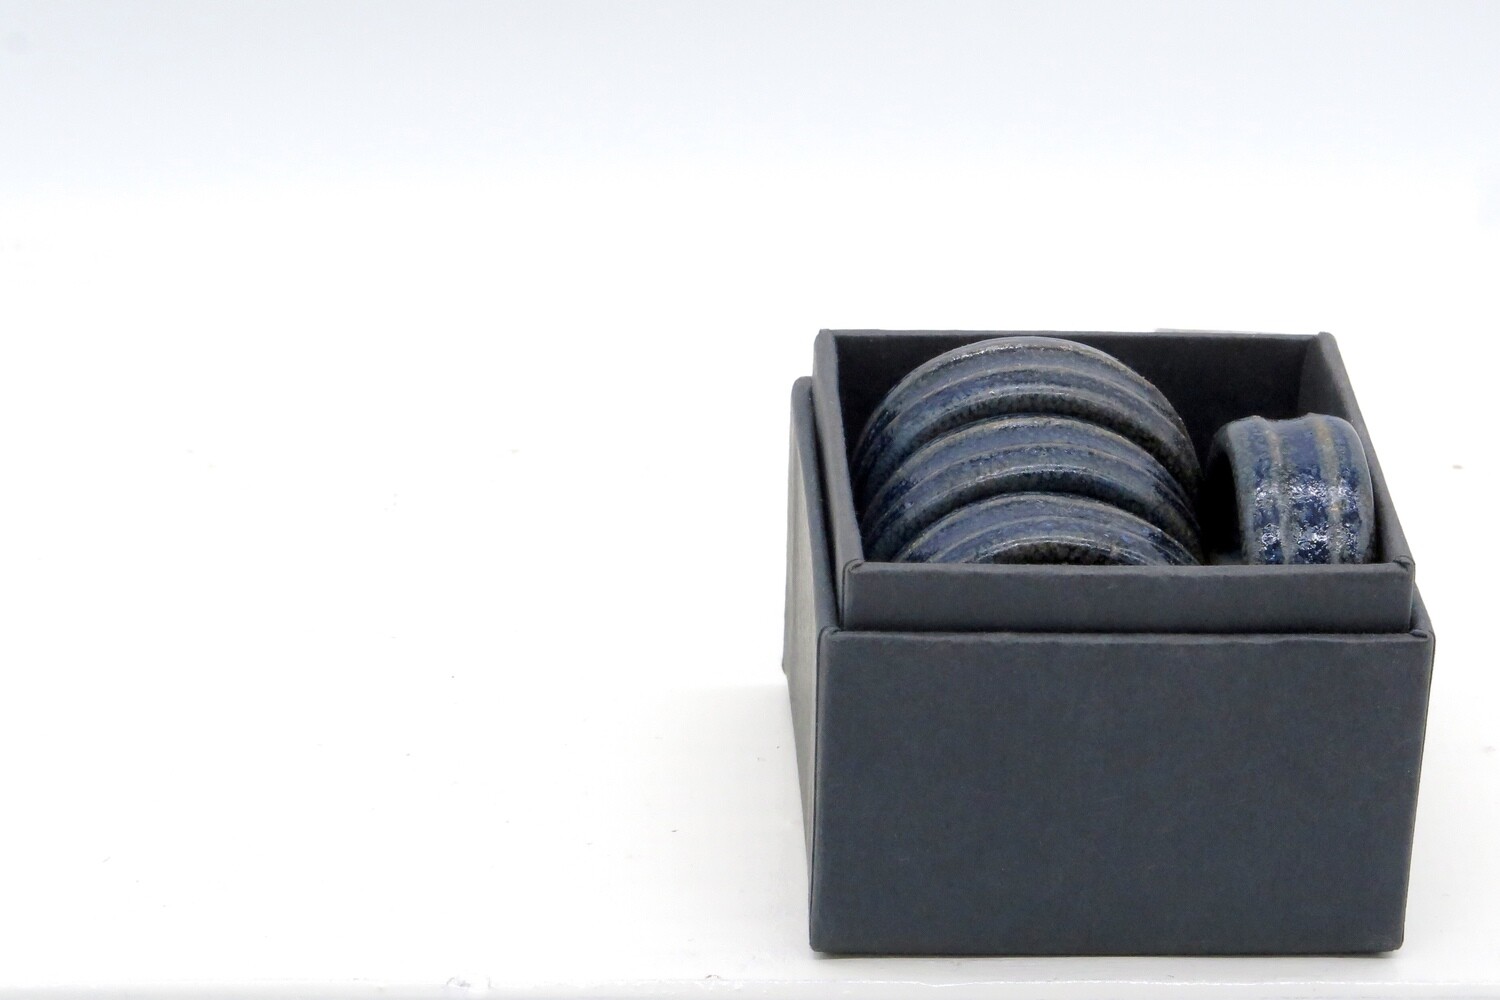 Napkin rings - set of 4 blue napkin rings in a gift box.